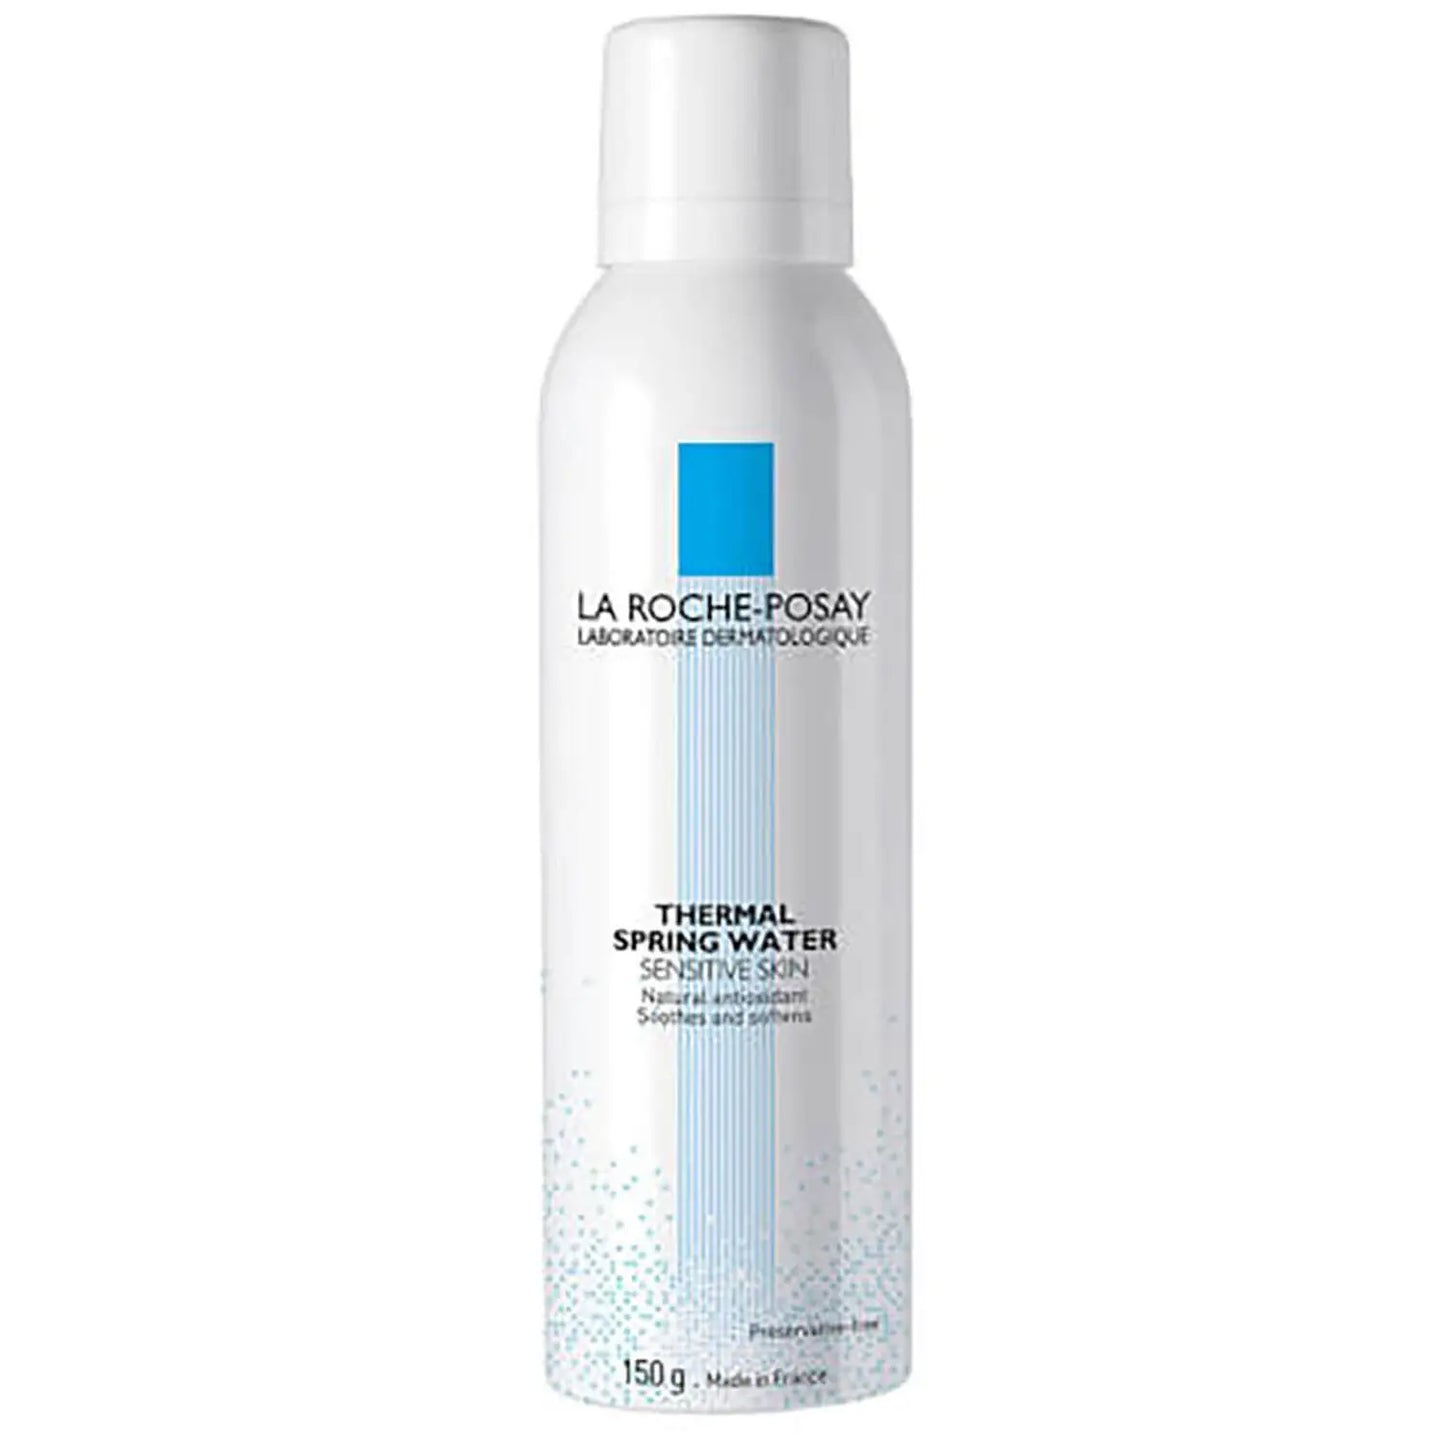 La Roche-Posay Thermal Spring Water for sensitive skin150ml